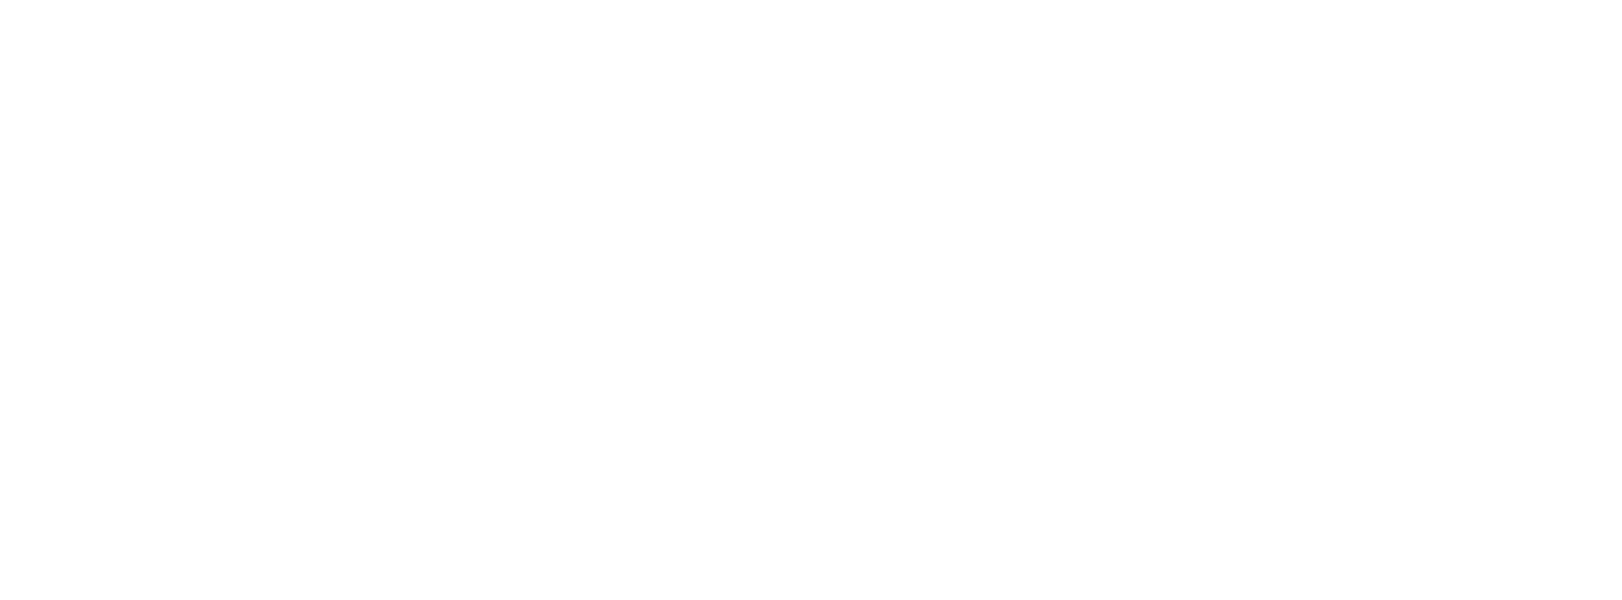 Altay Batuhan Logo